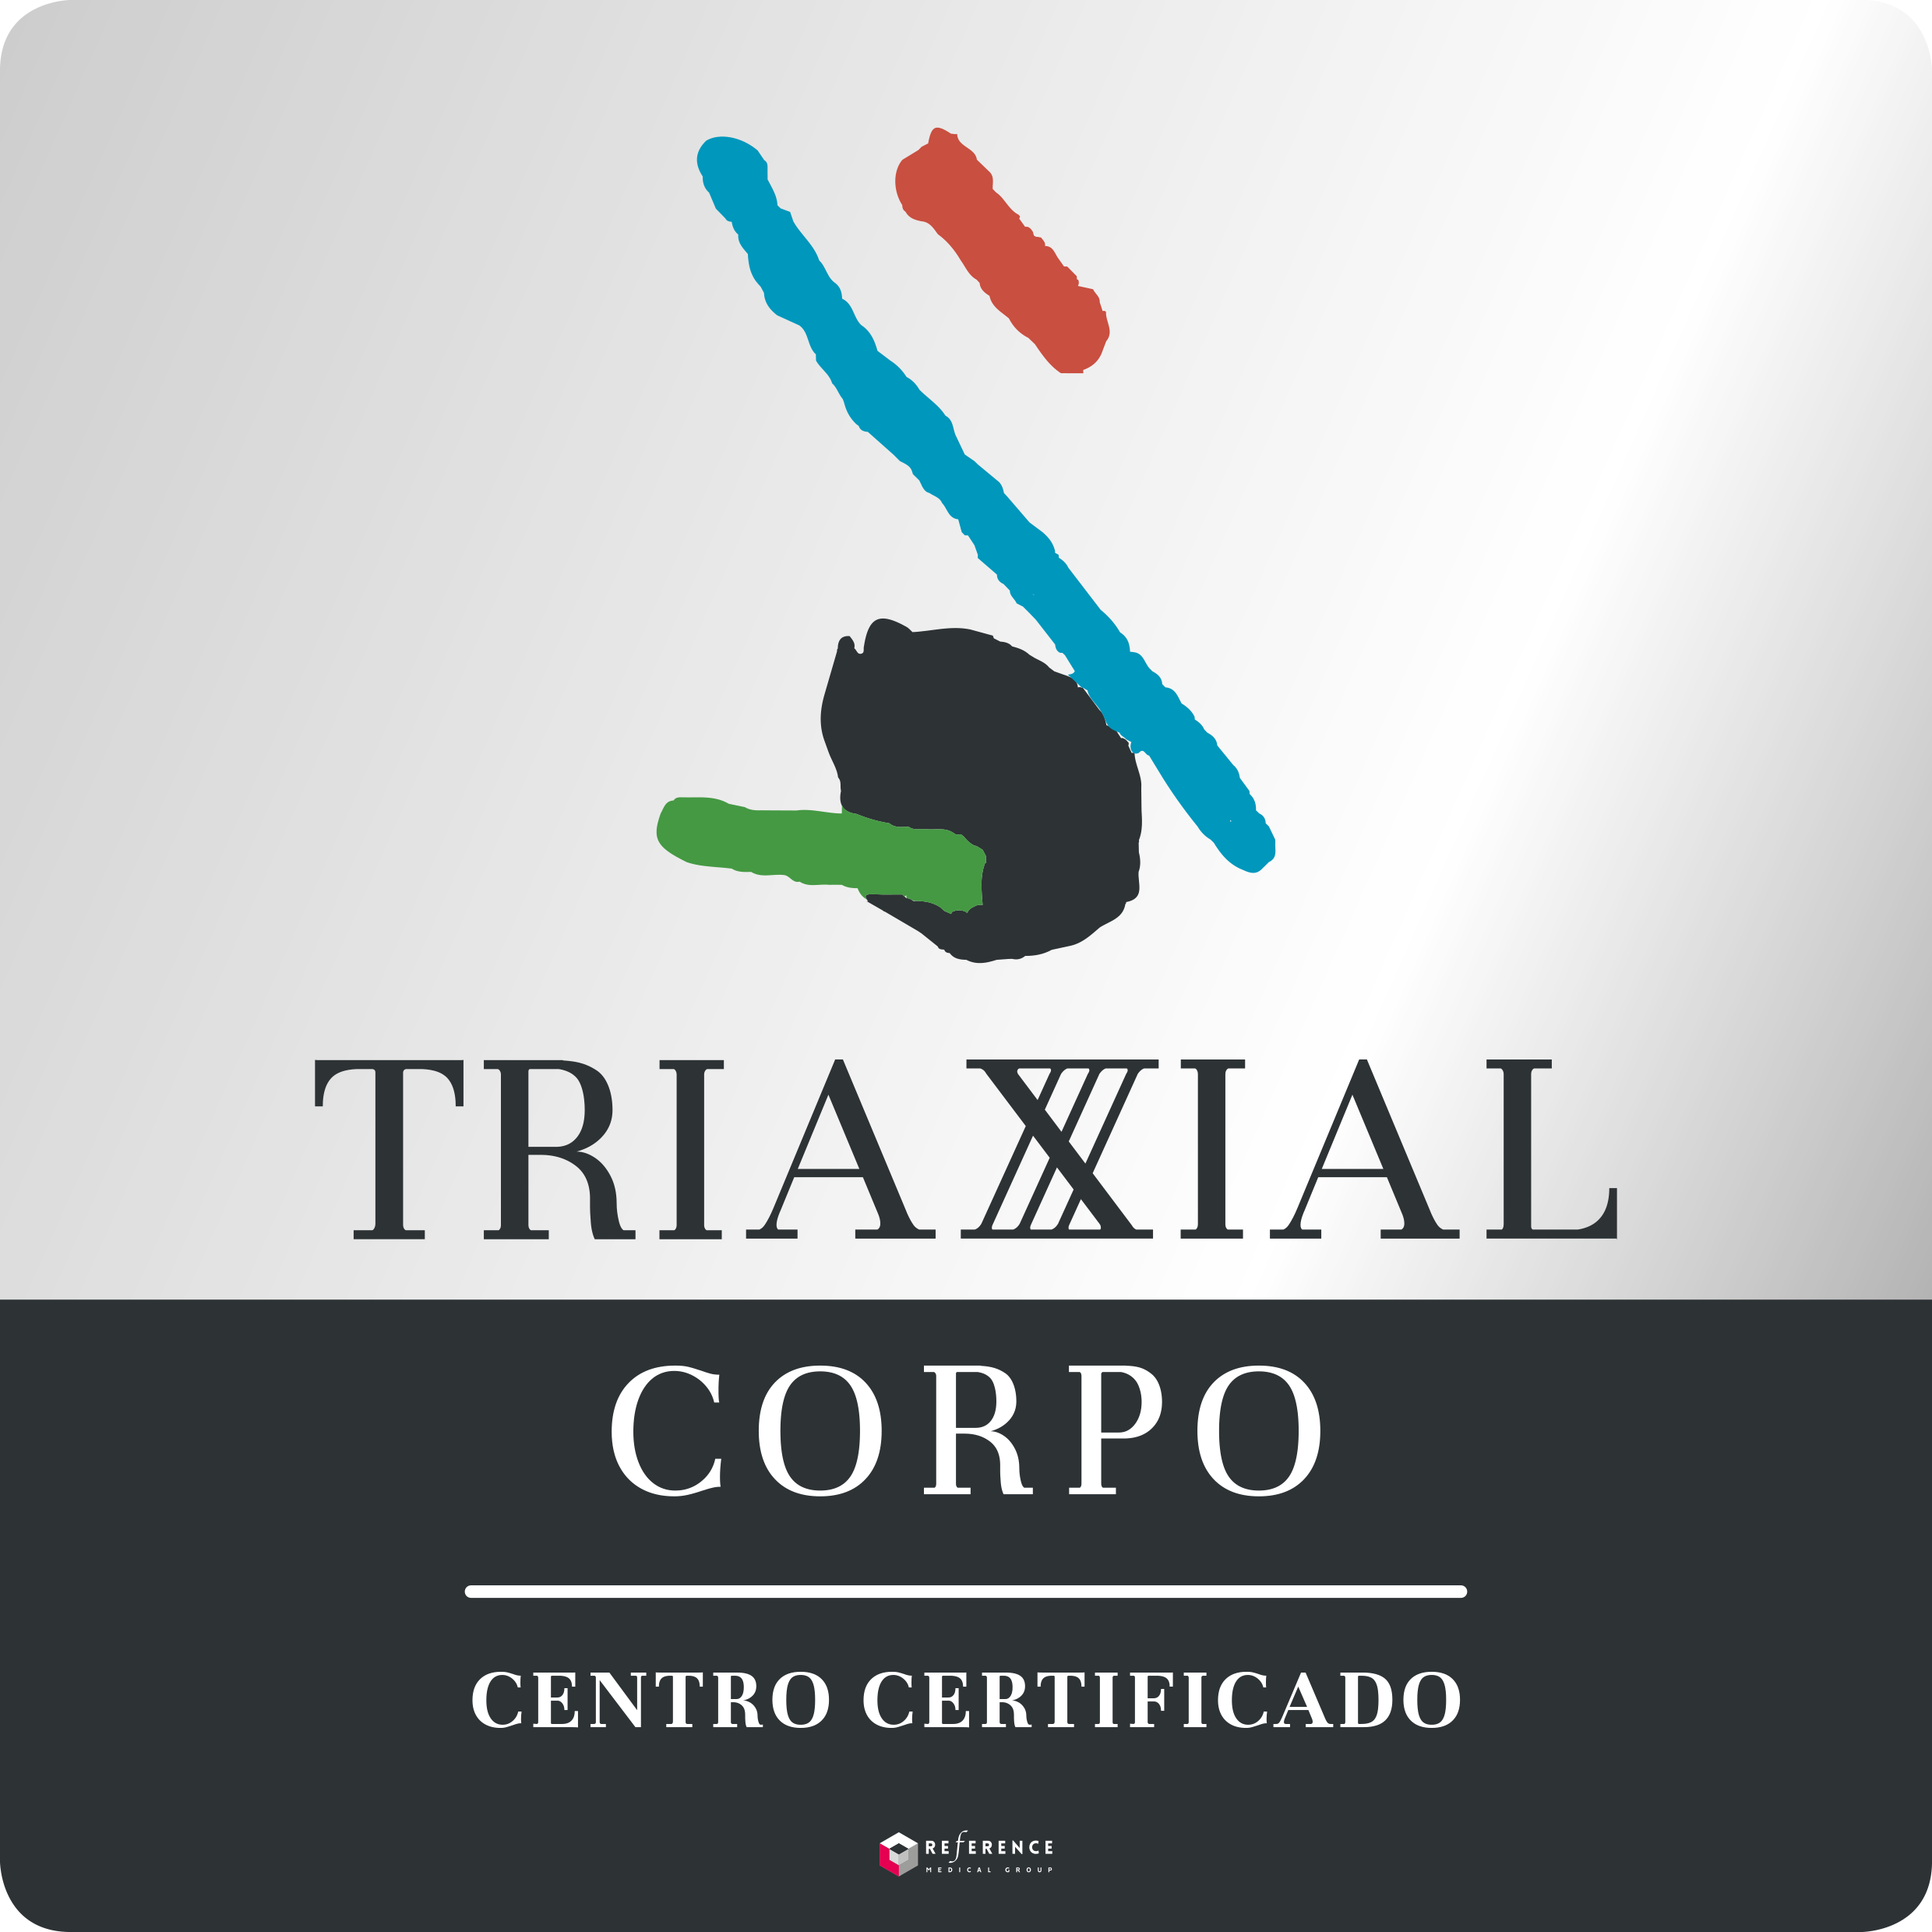 Triaxial Corpo - Centro Certificado